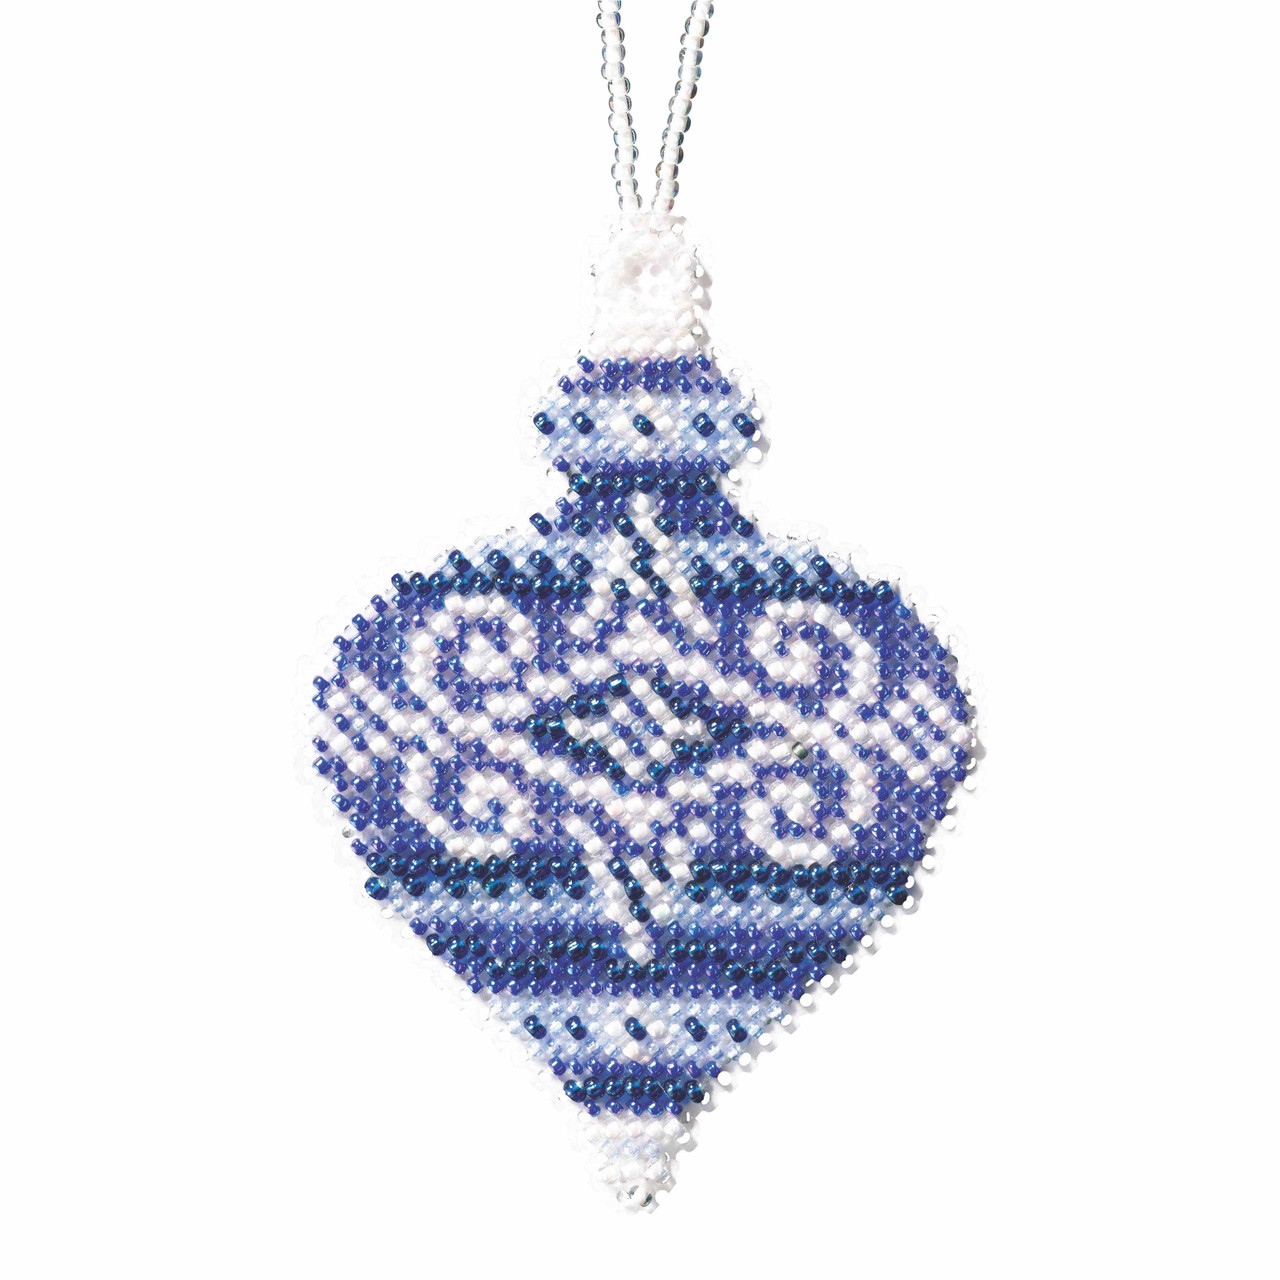 Azure Medallion Beaded Cross Stitch Ornament Kit Mill Hill 2019 Beaded  Holiday MH211912